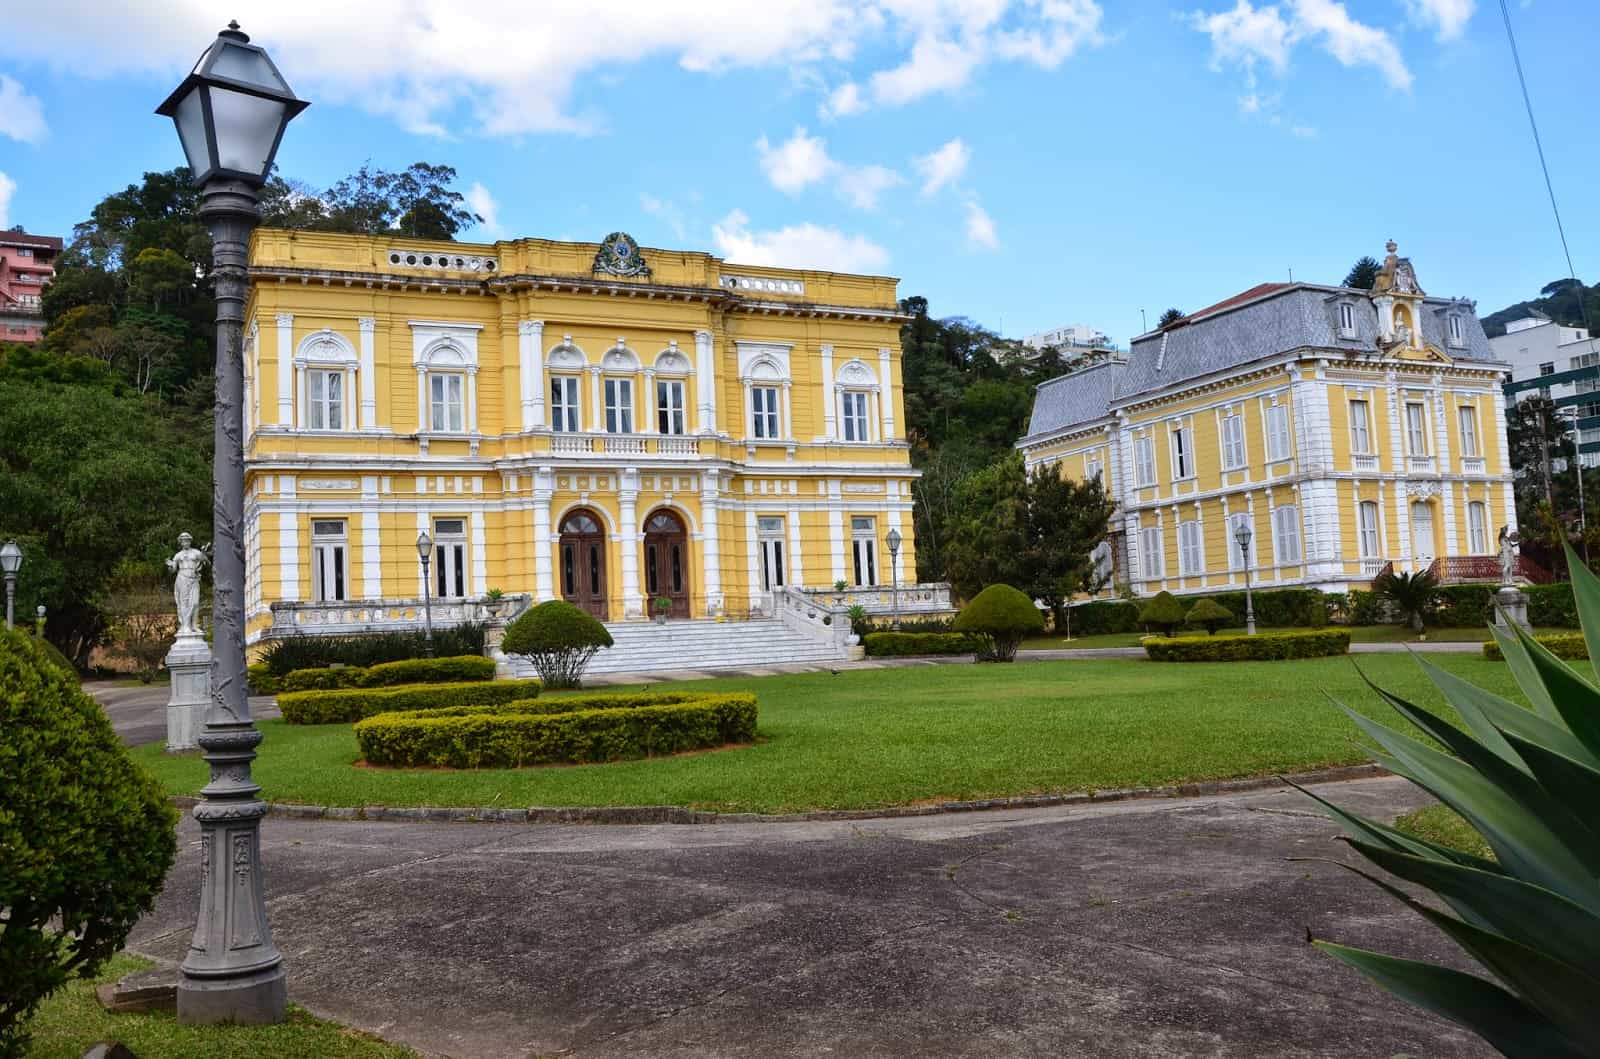 Palácio Rio Negro in Petrópolis, Brazil